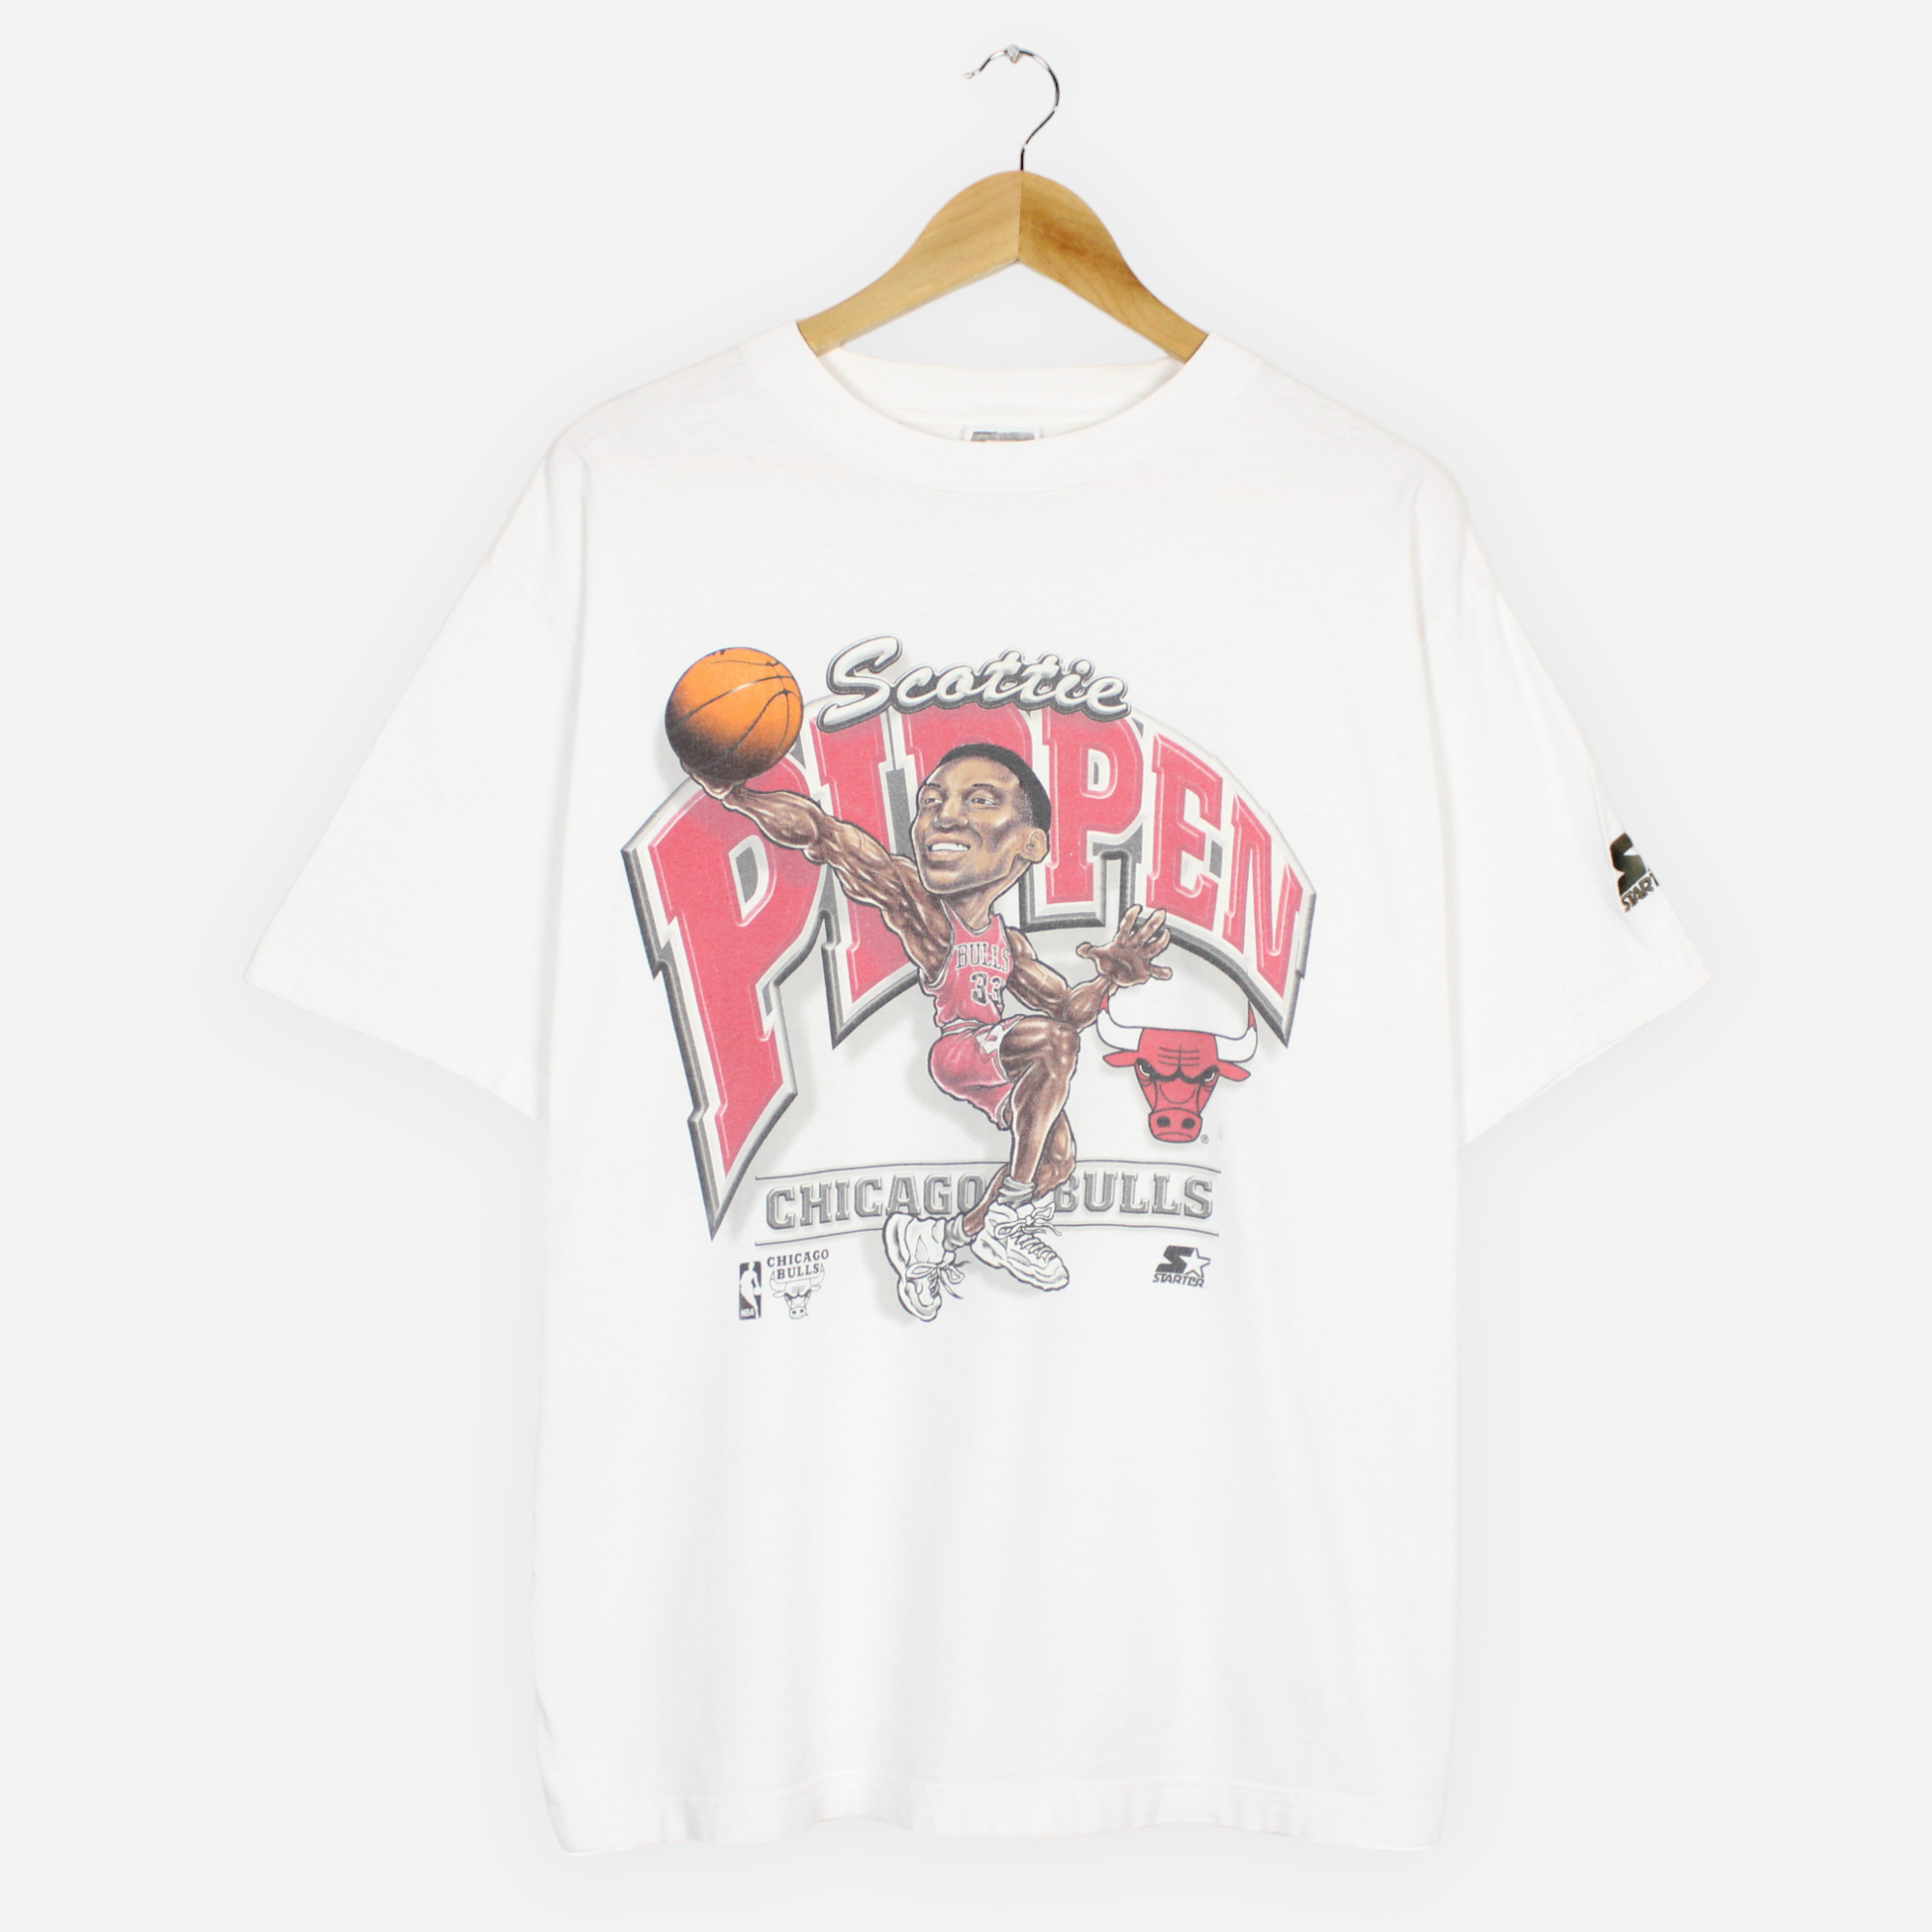 Basketball Vintage Retro 80s Scottie Pippen shirt - Limotees